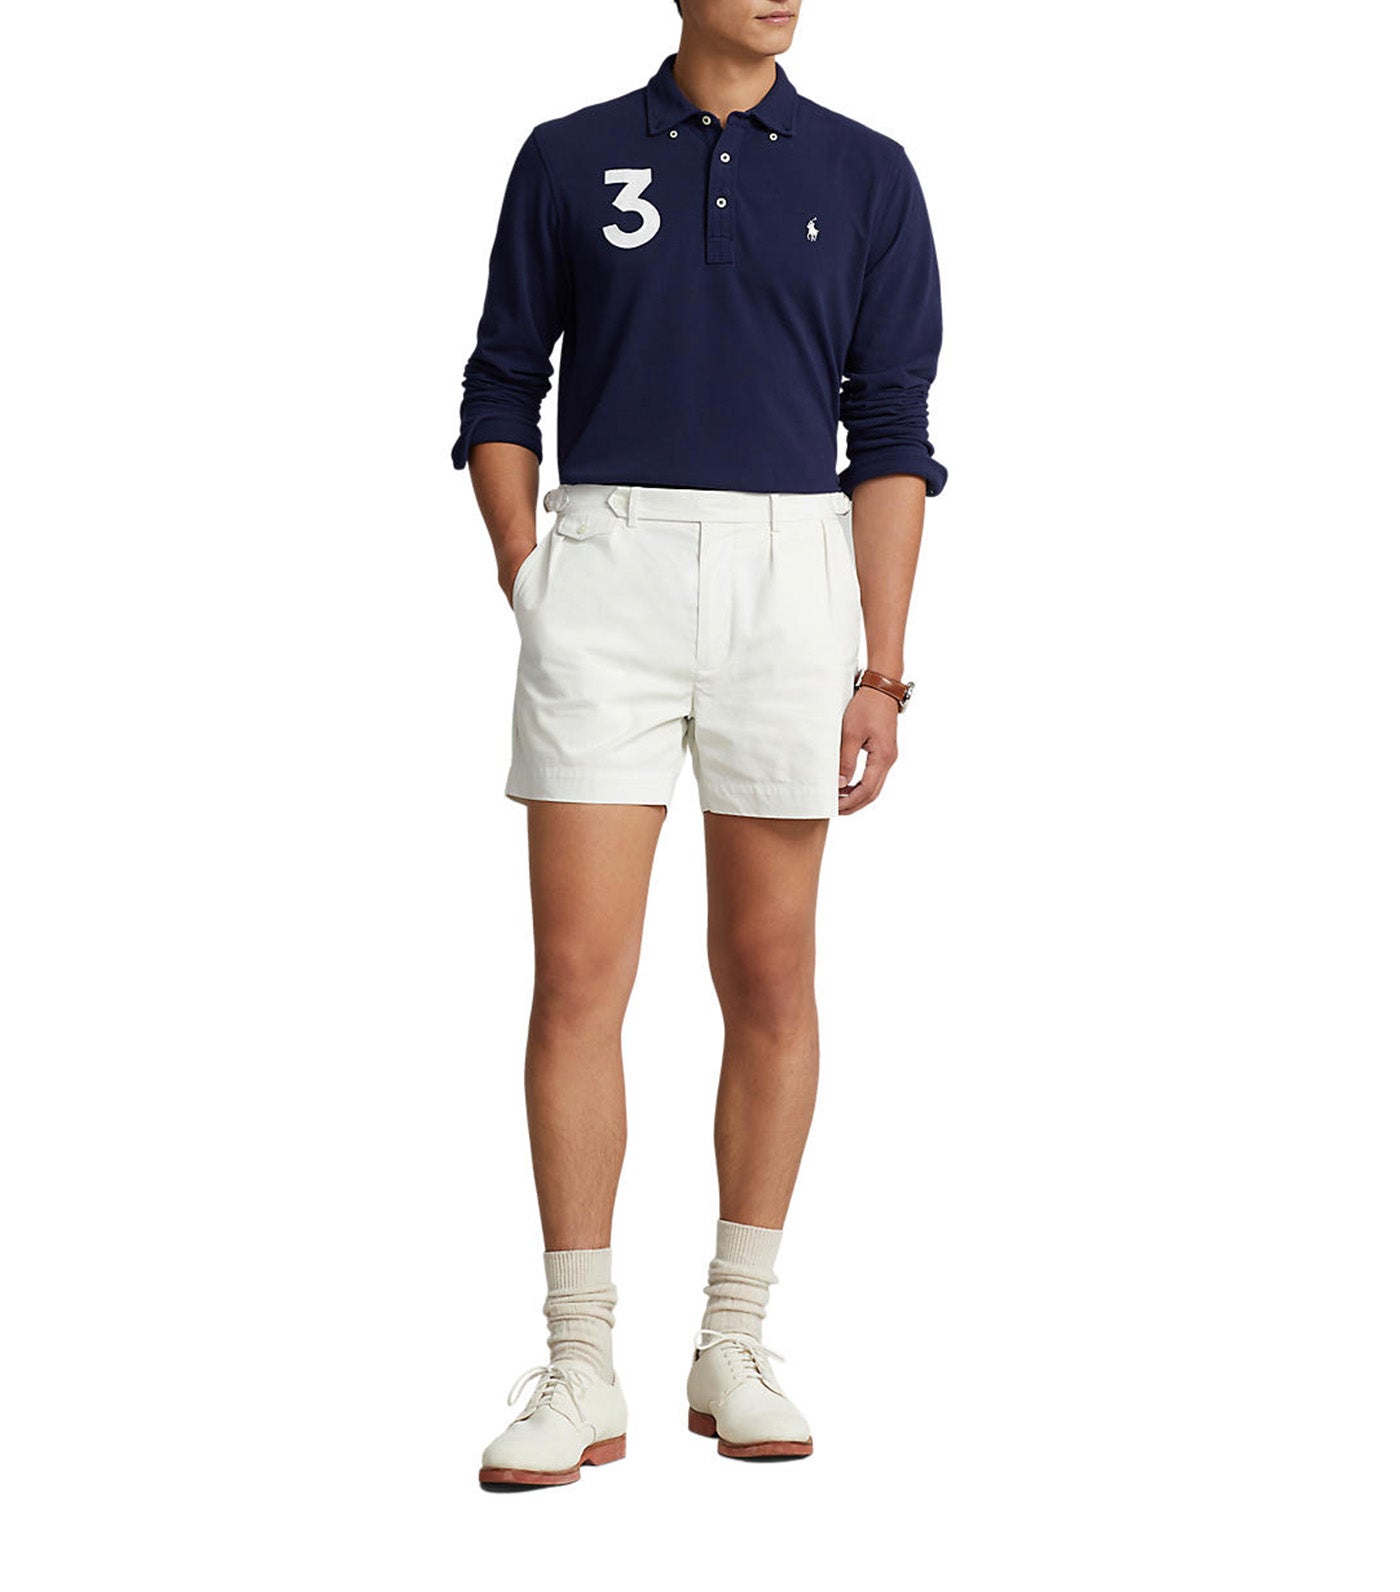 Men's Classic Fit Mesh Polo Shirt Newport Navy